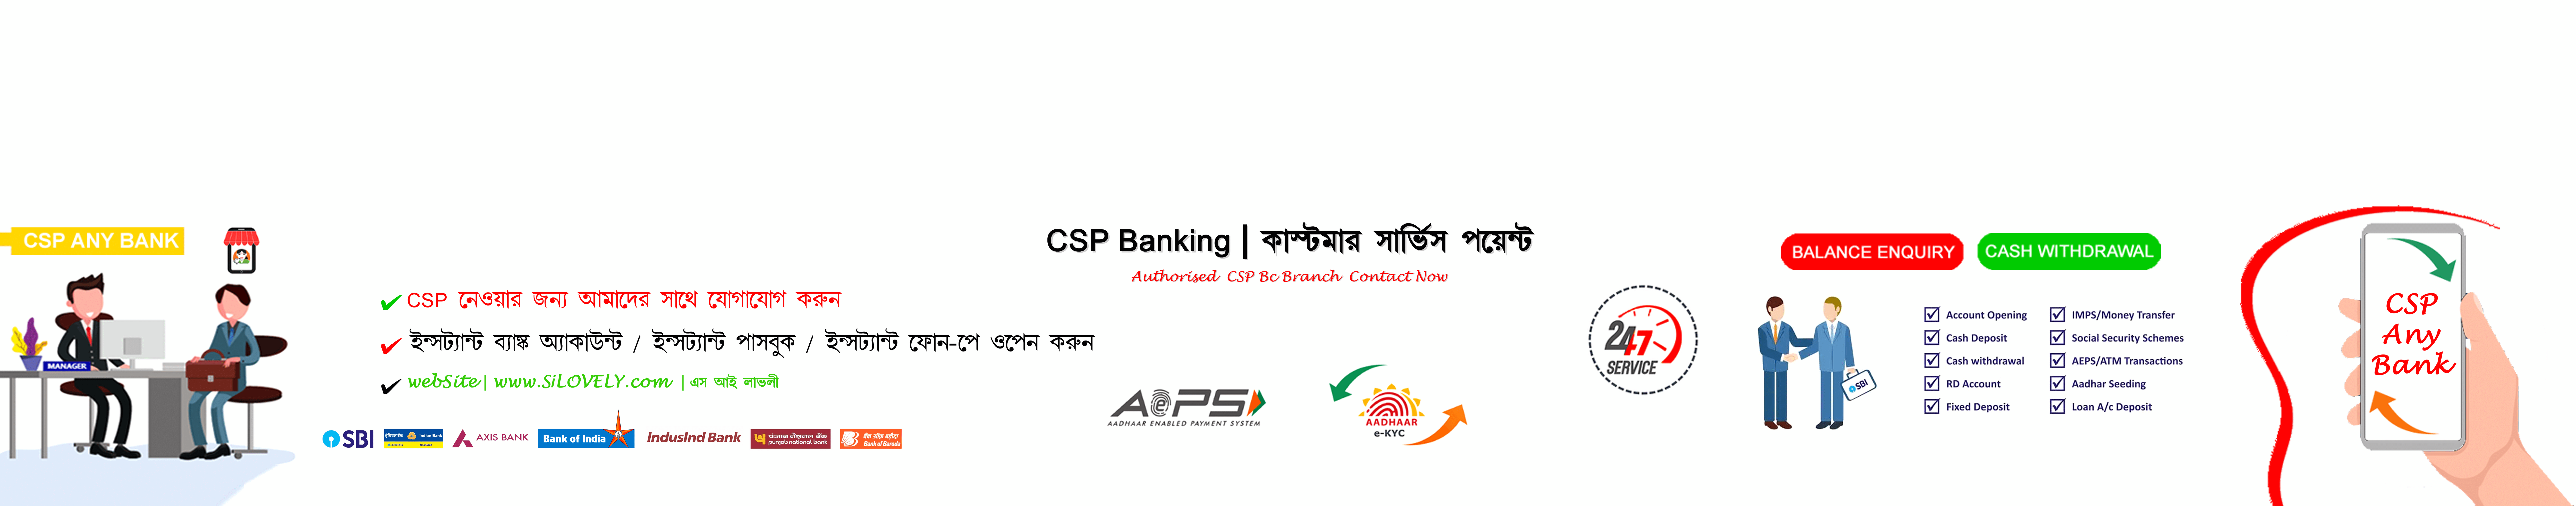 CSP Bank-banner